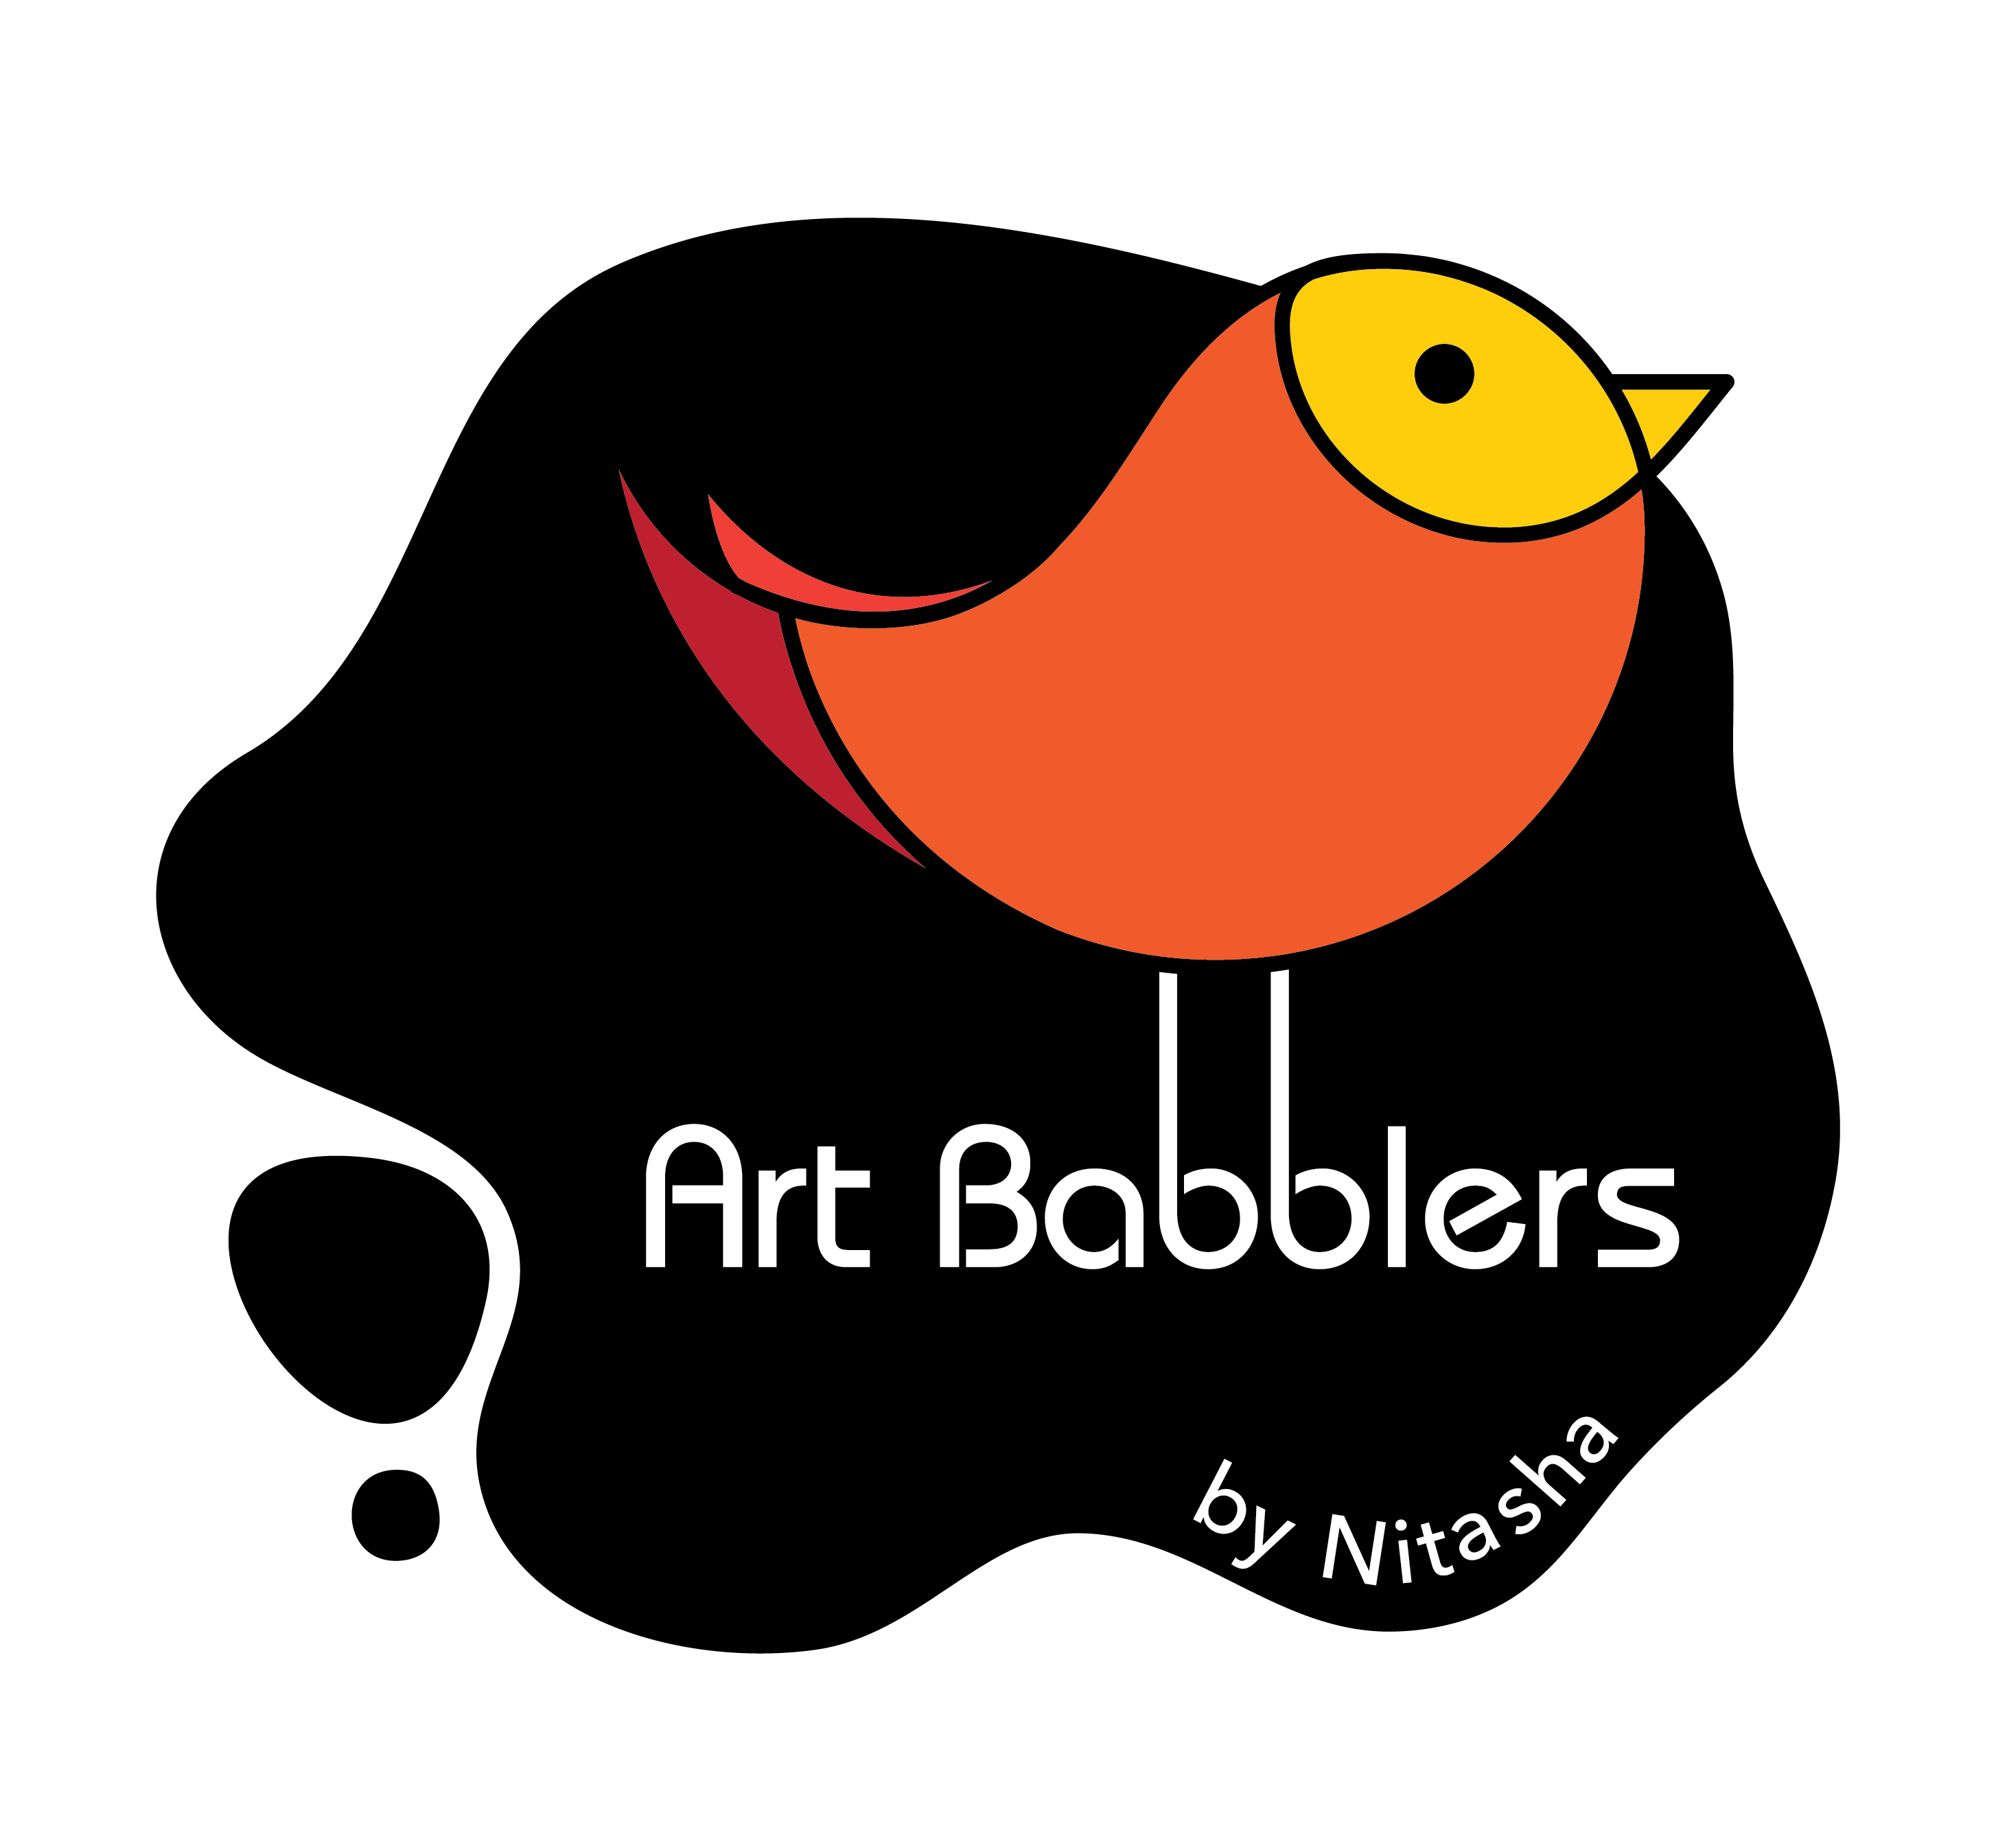 Blog of 'Art Babblers by Nitasha'